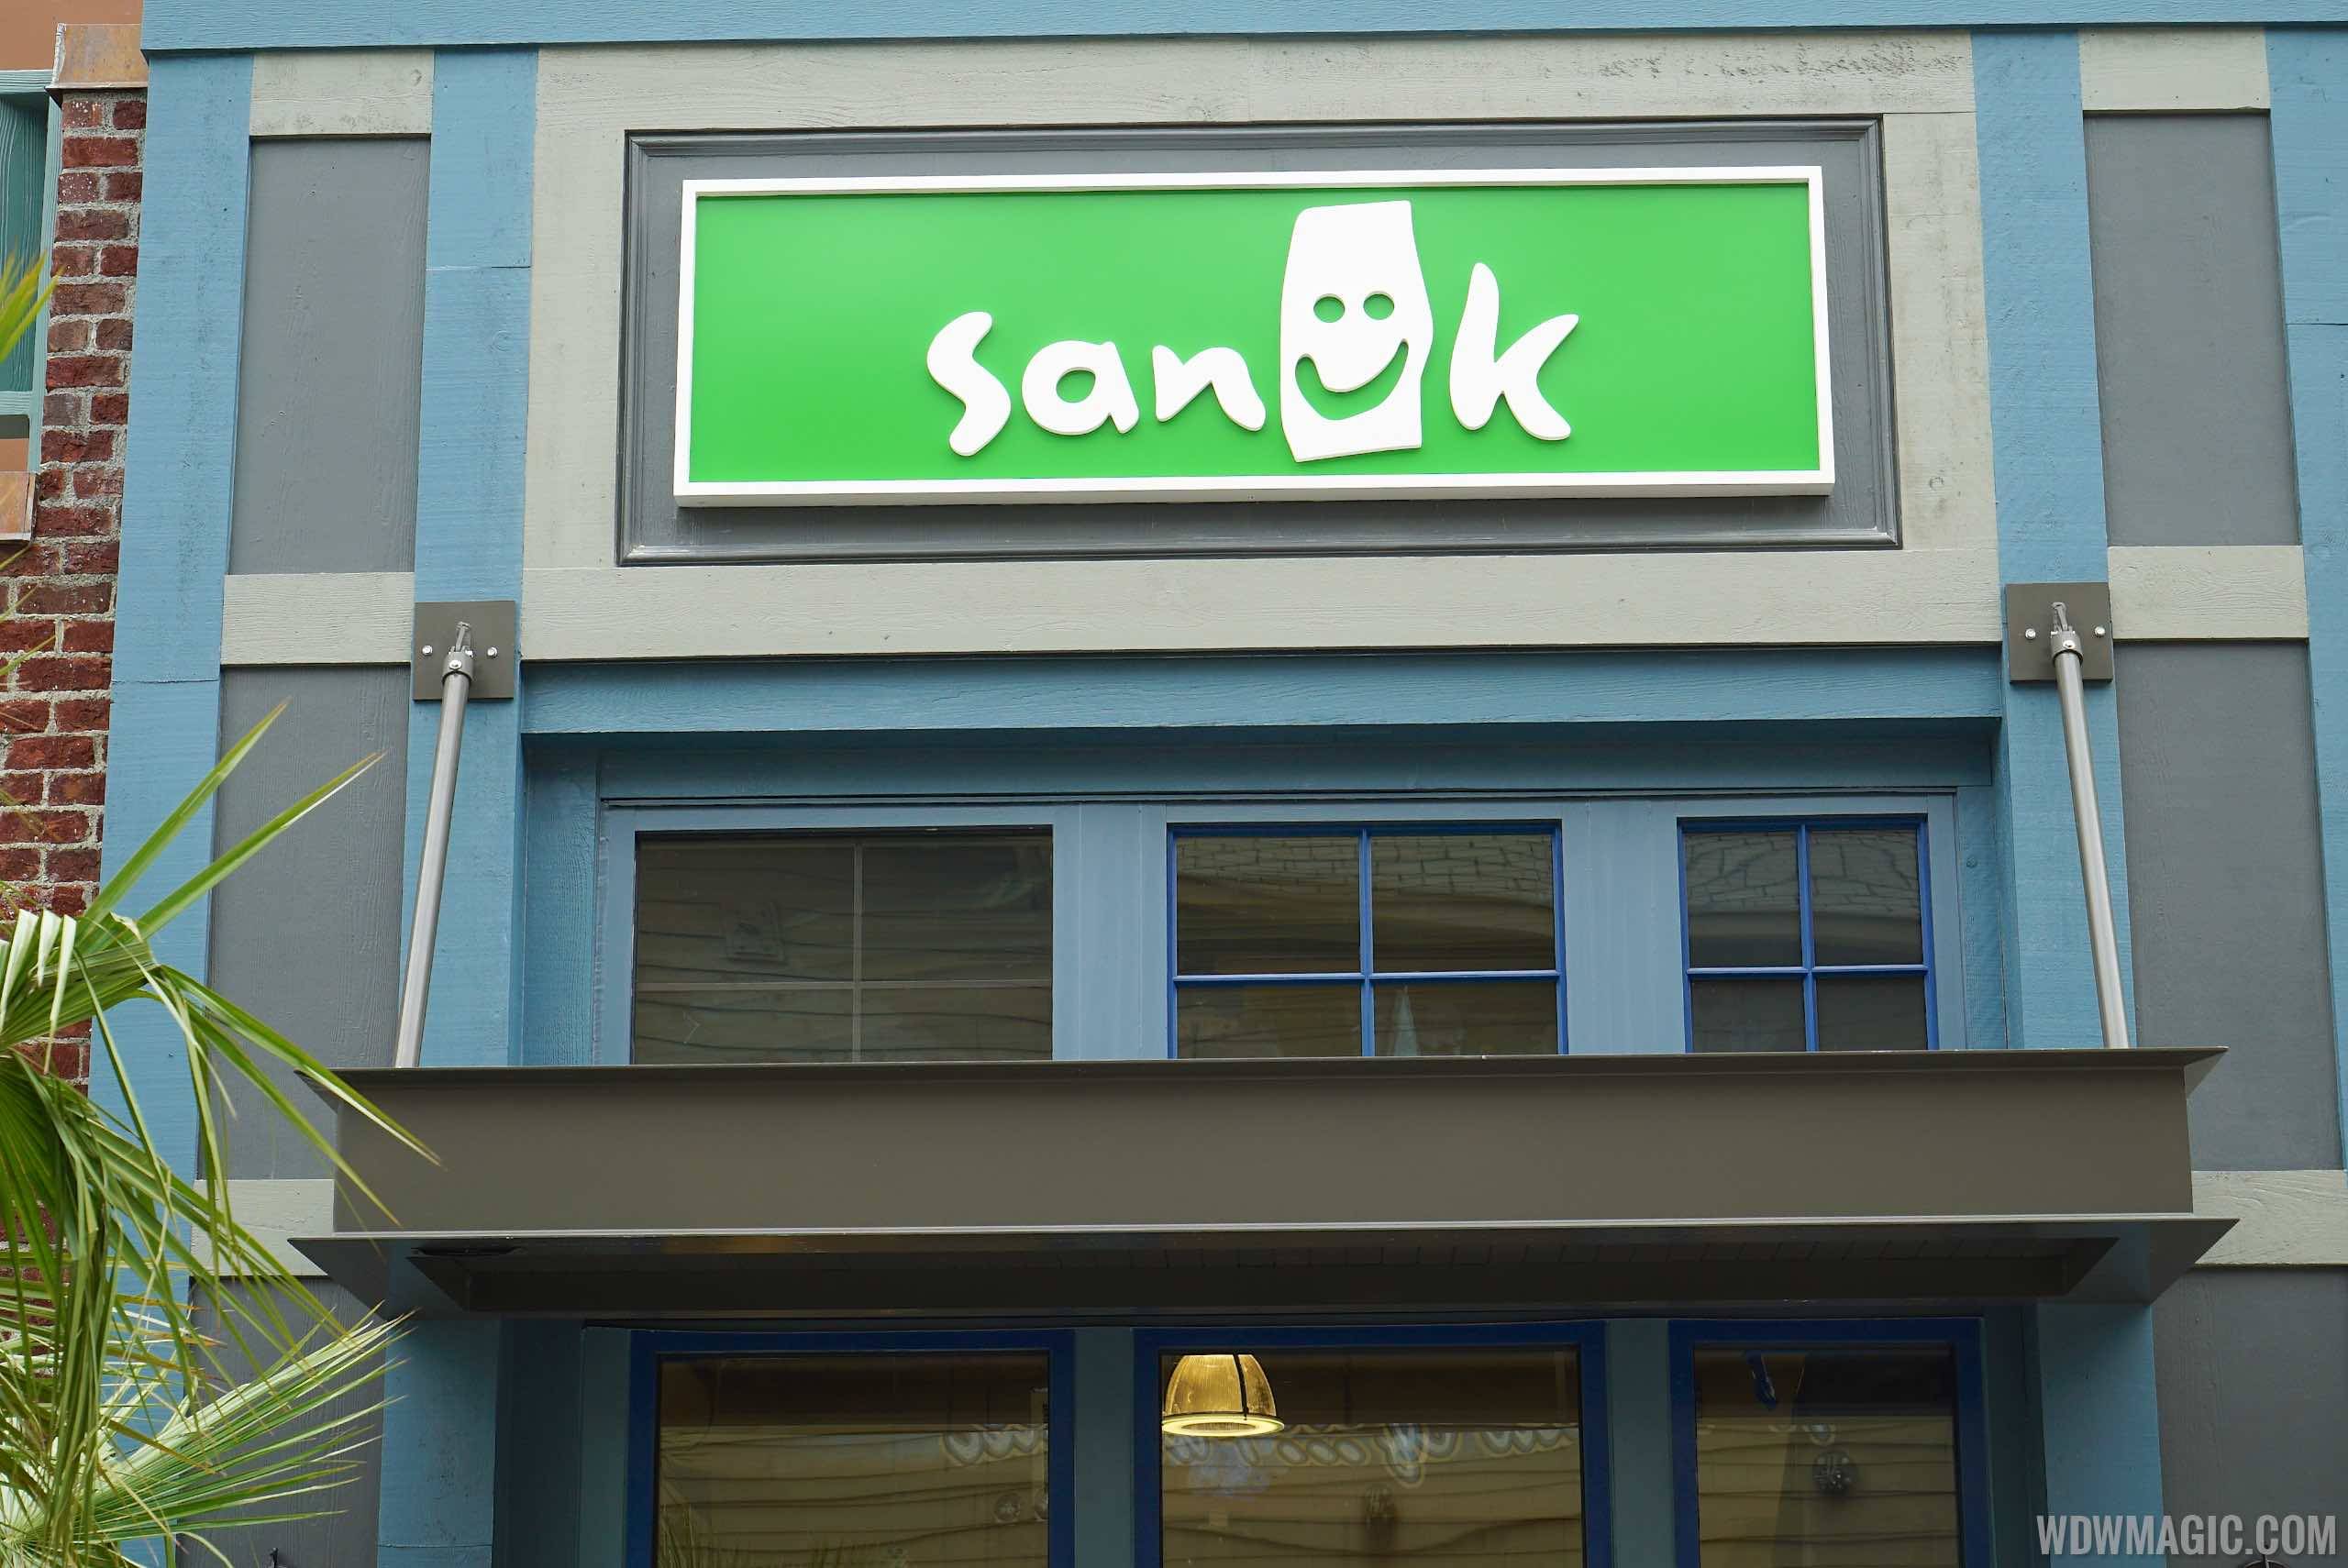 Sanuk Signage